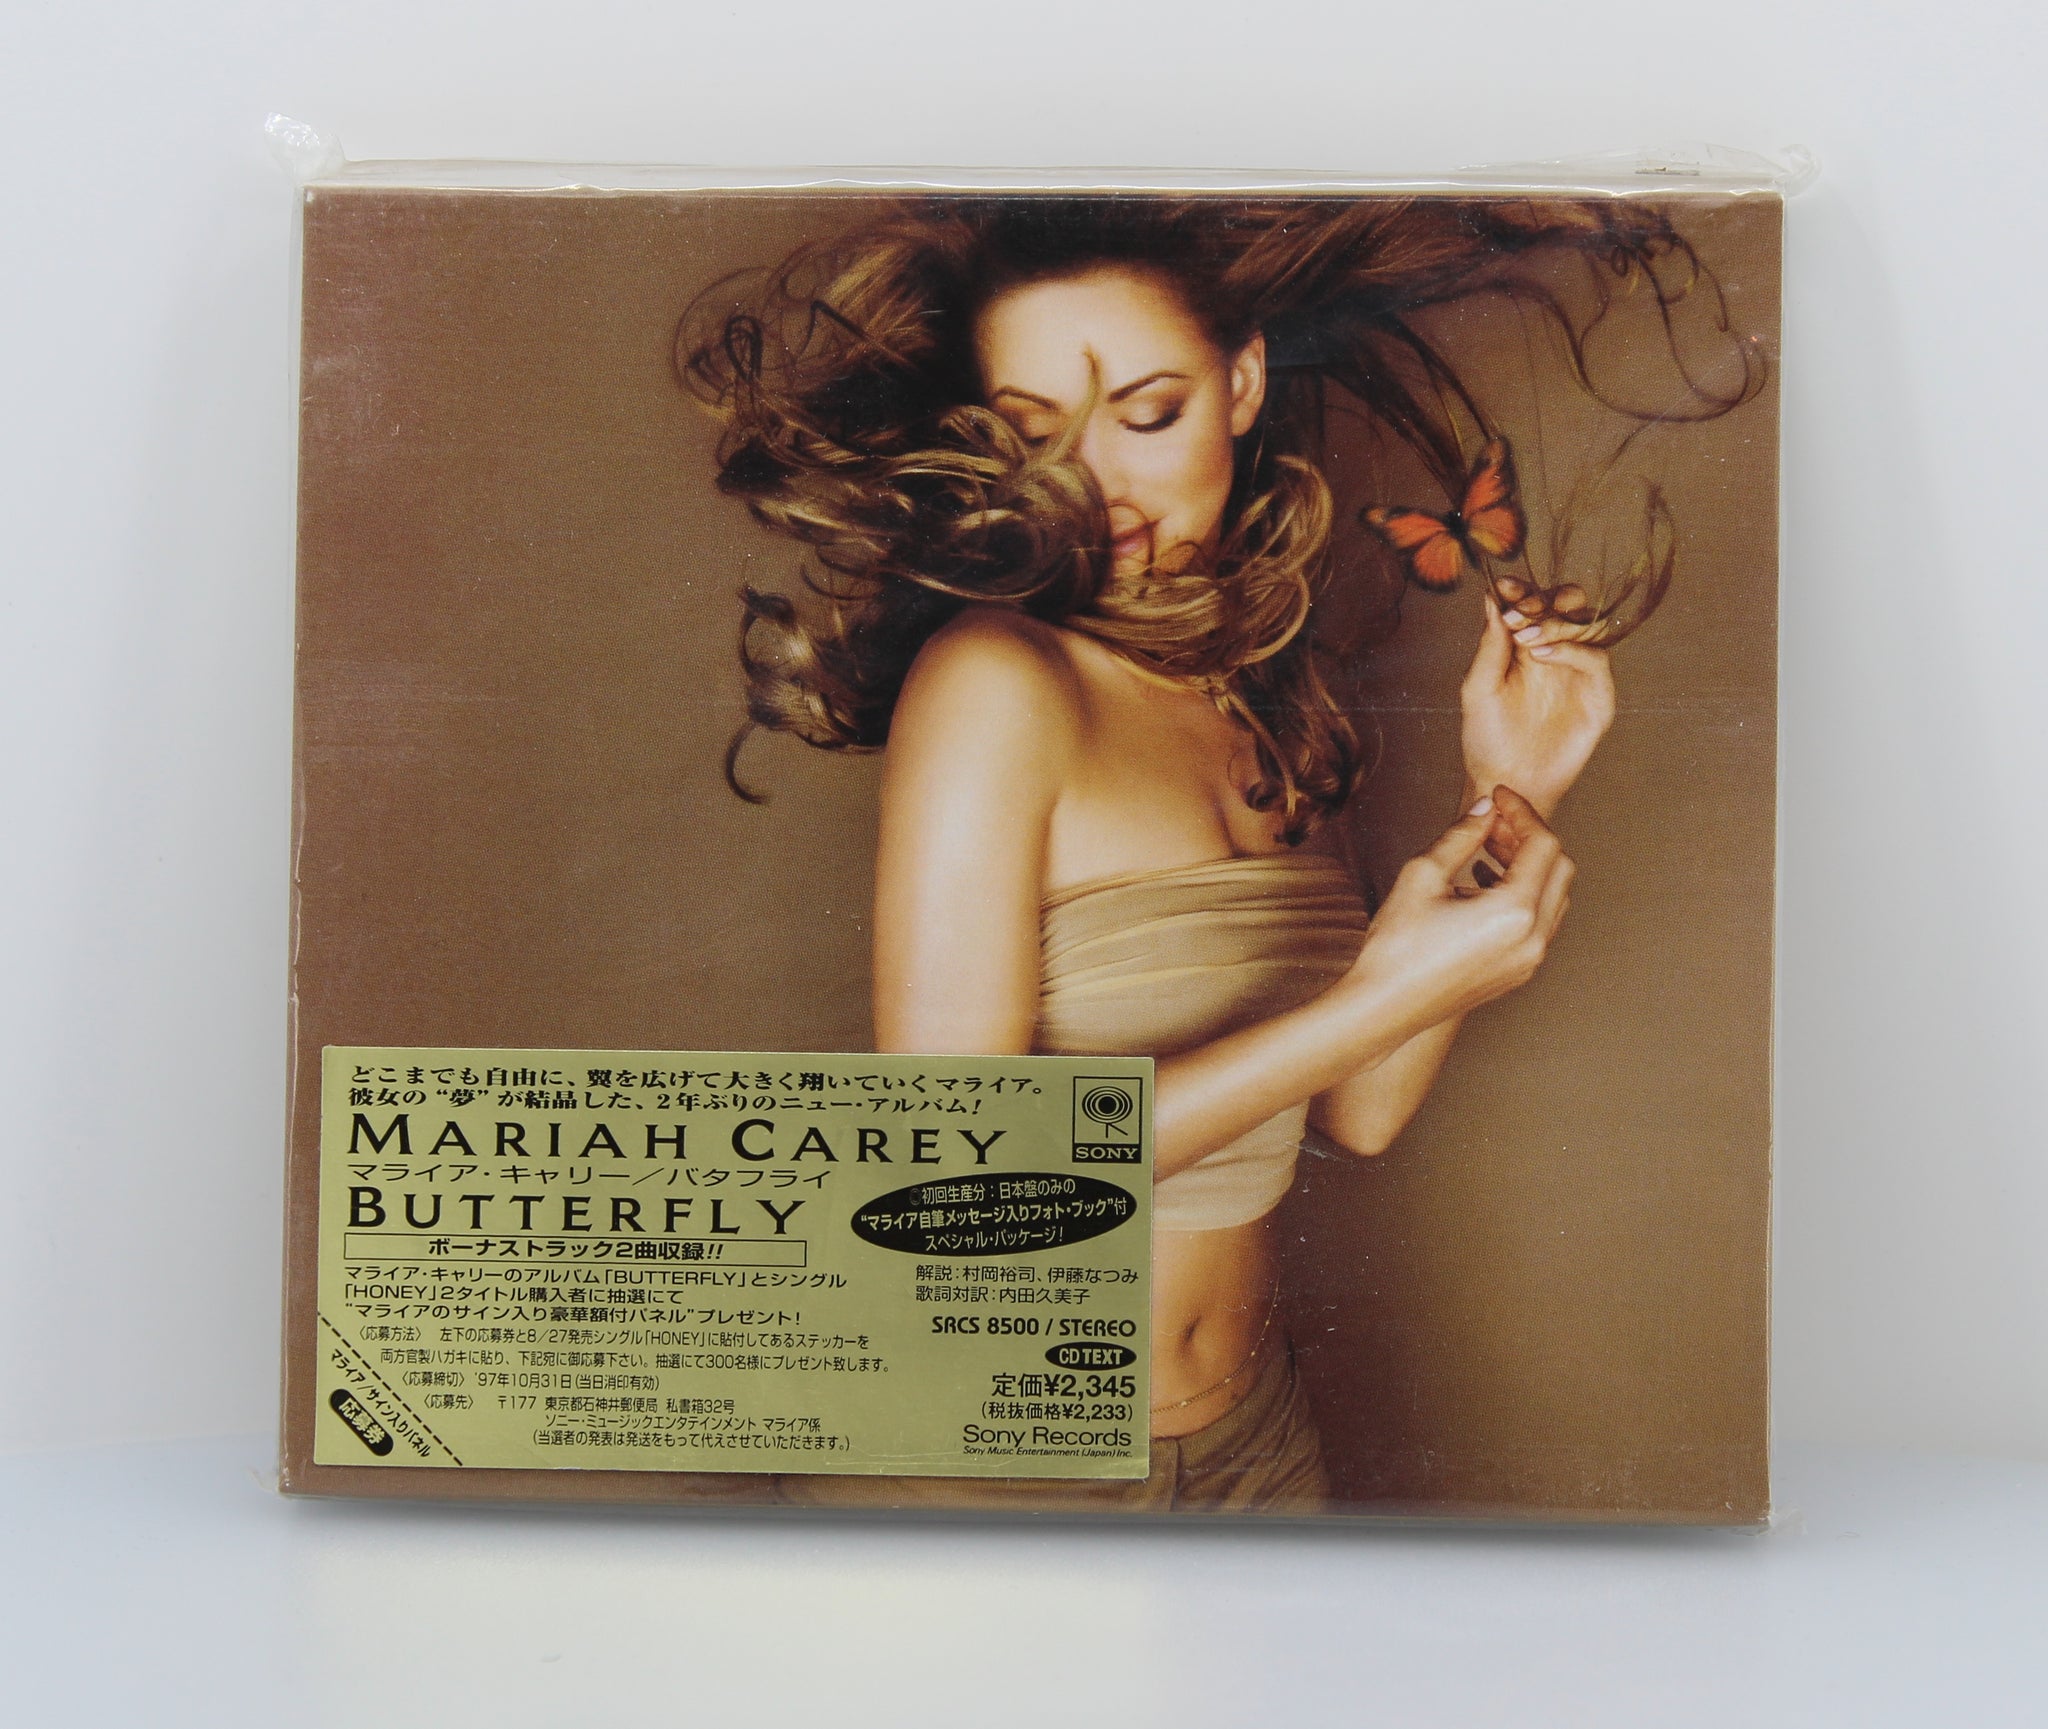 Mariah Carey u003d マライア・キャリー* – Butterfly u003d バタフラ